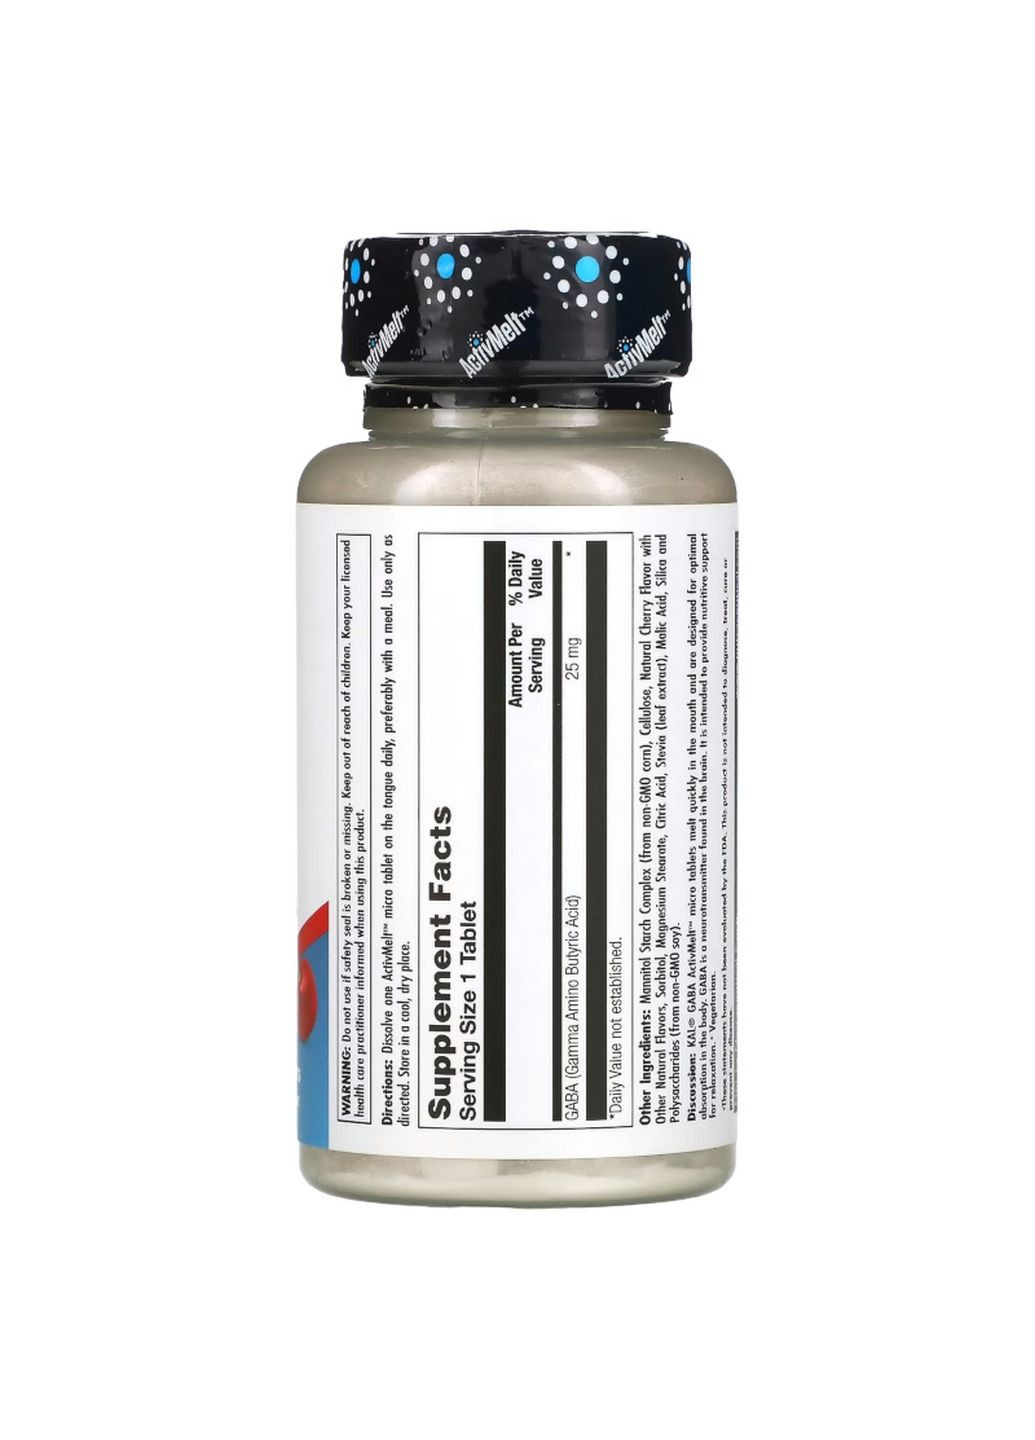 Аминокислота GABA 25 mg, 120 мини таблеток Вишня KAL (293339339)